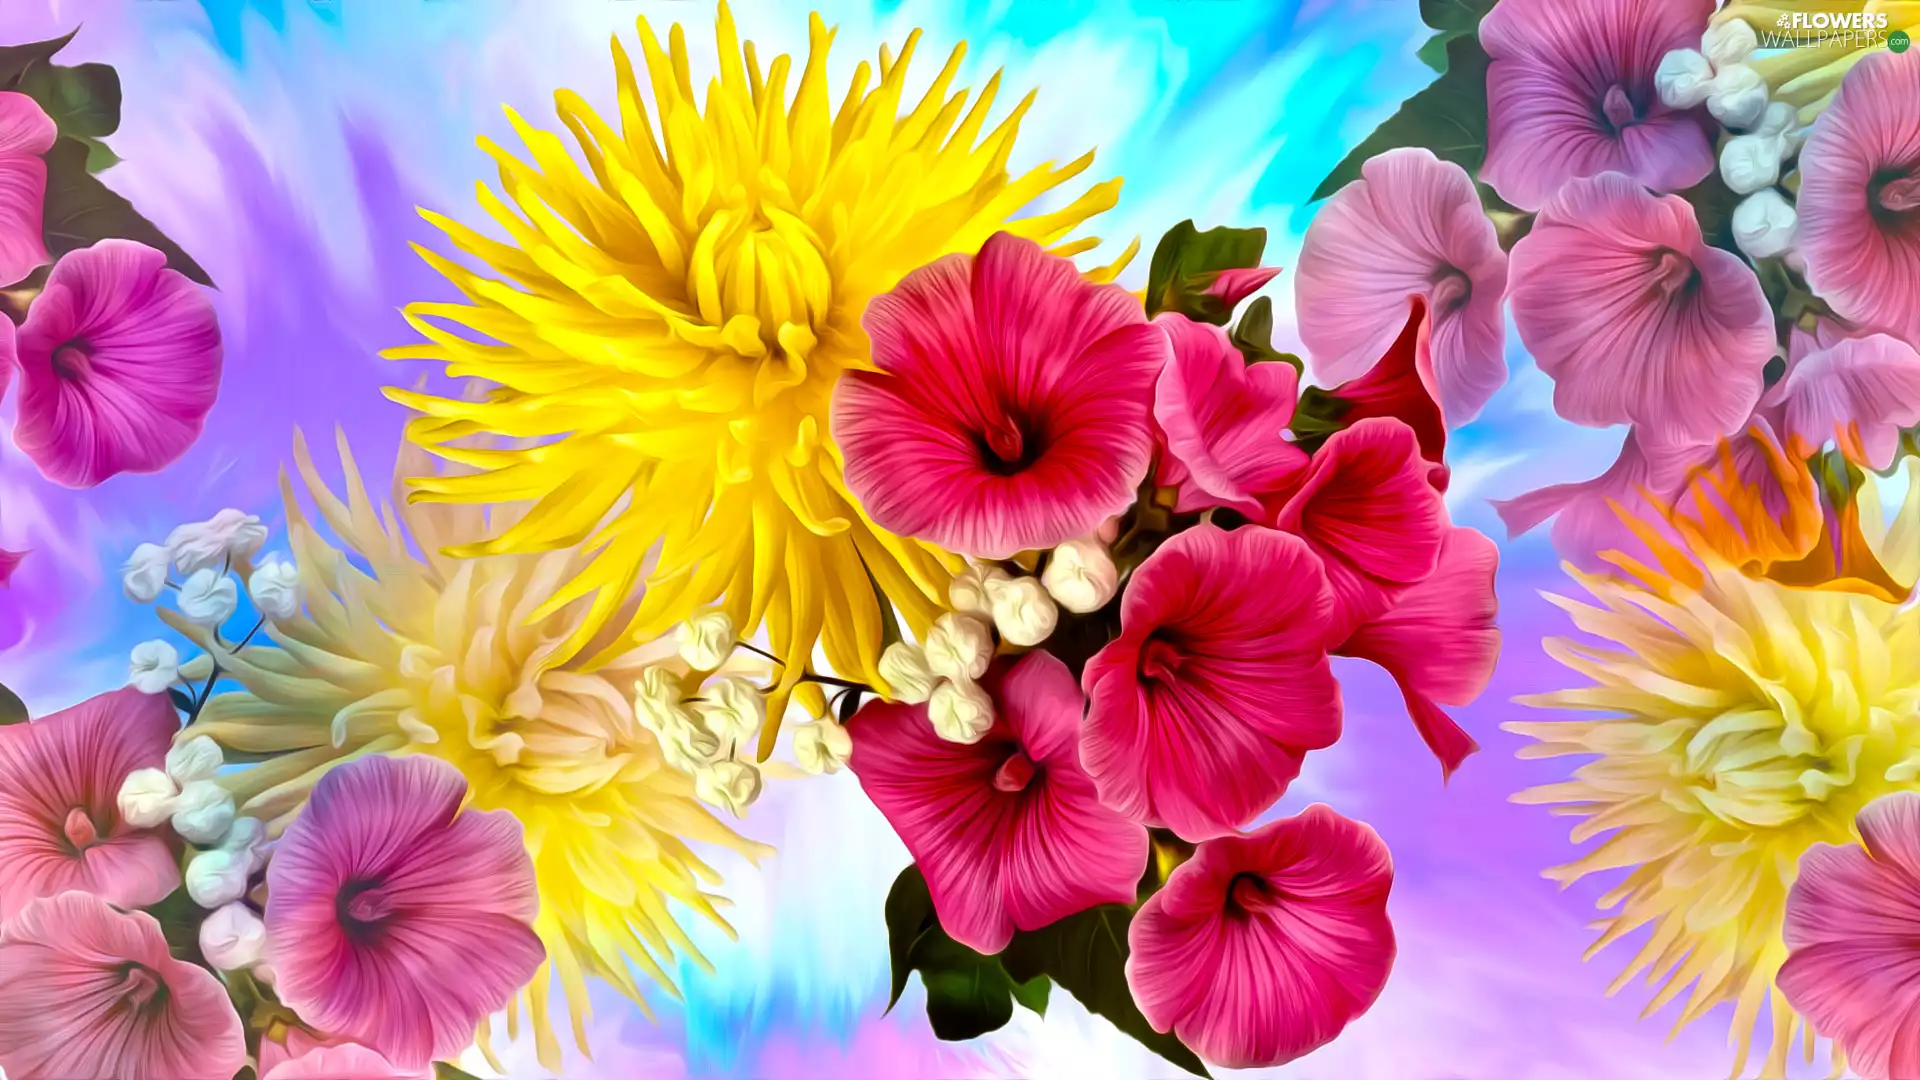 Flowers, chrysanthemum, graphics, petunia